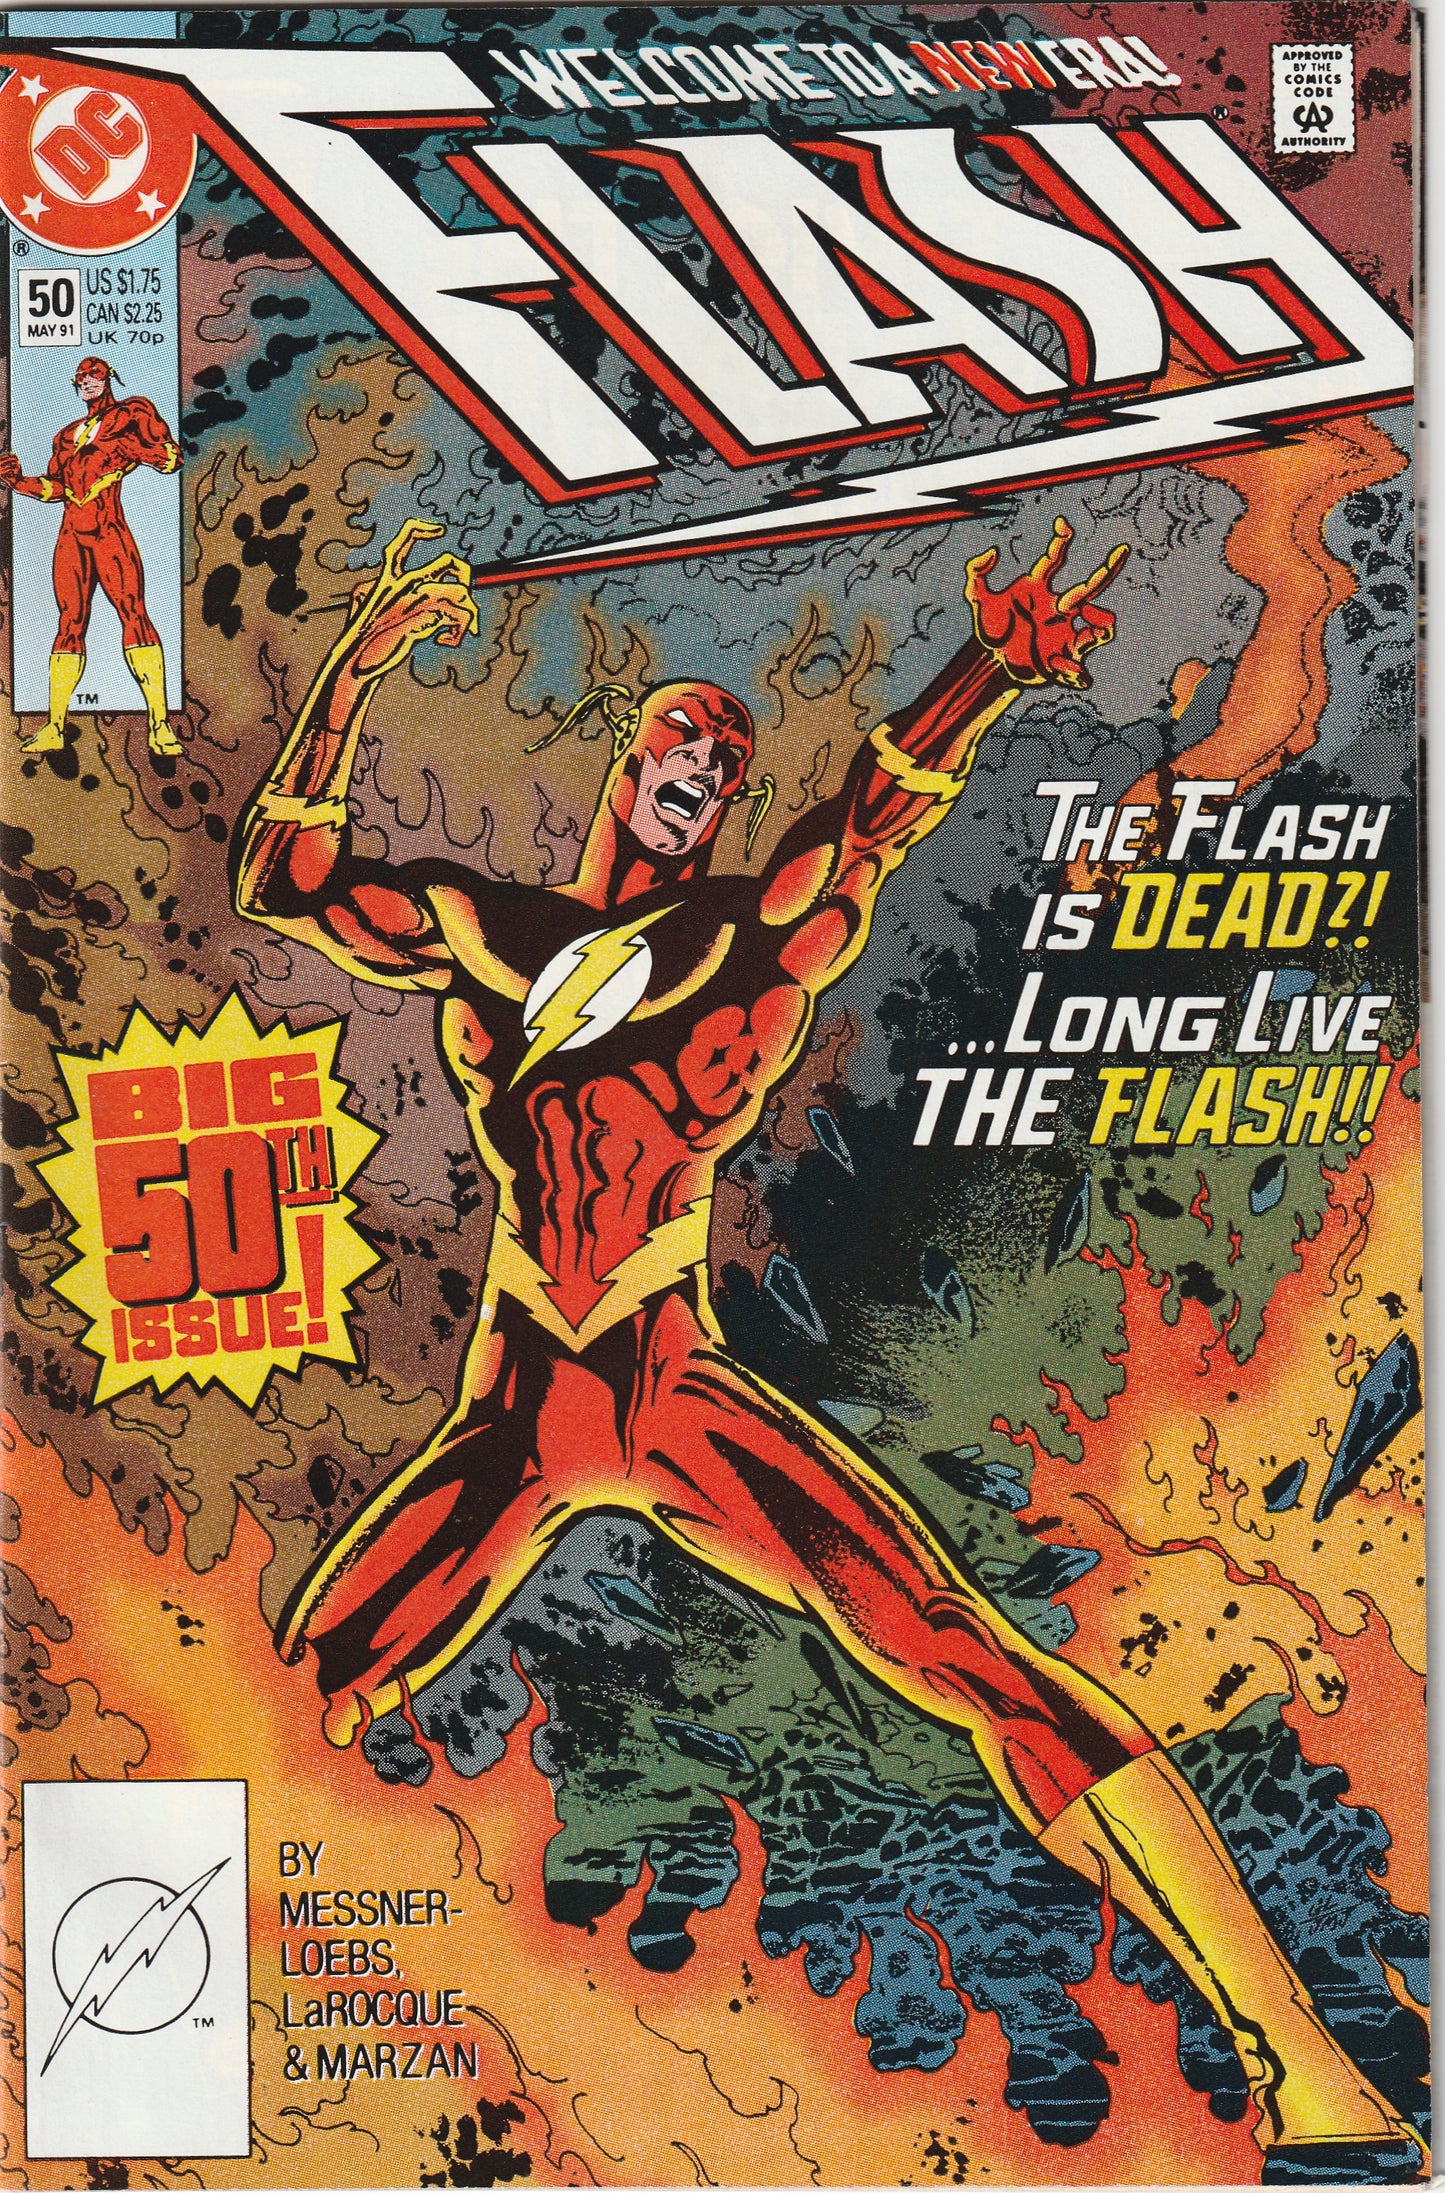 Flash #50 (Volume 2, 1991) - Double size